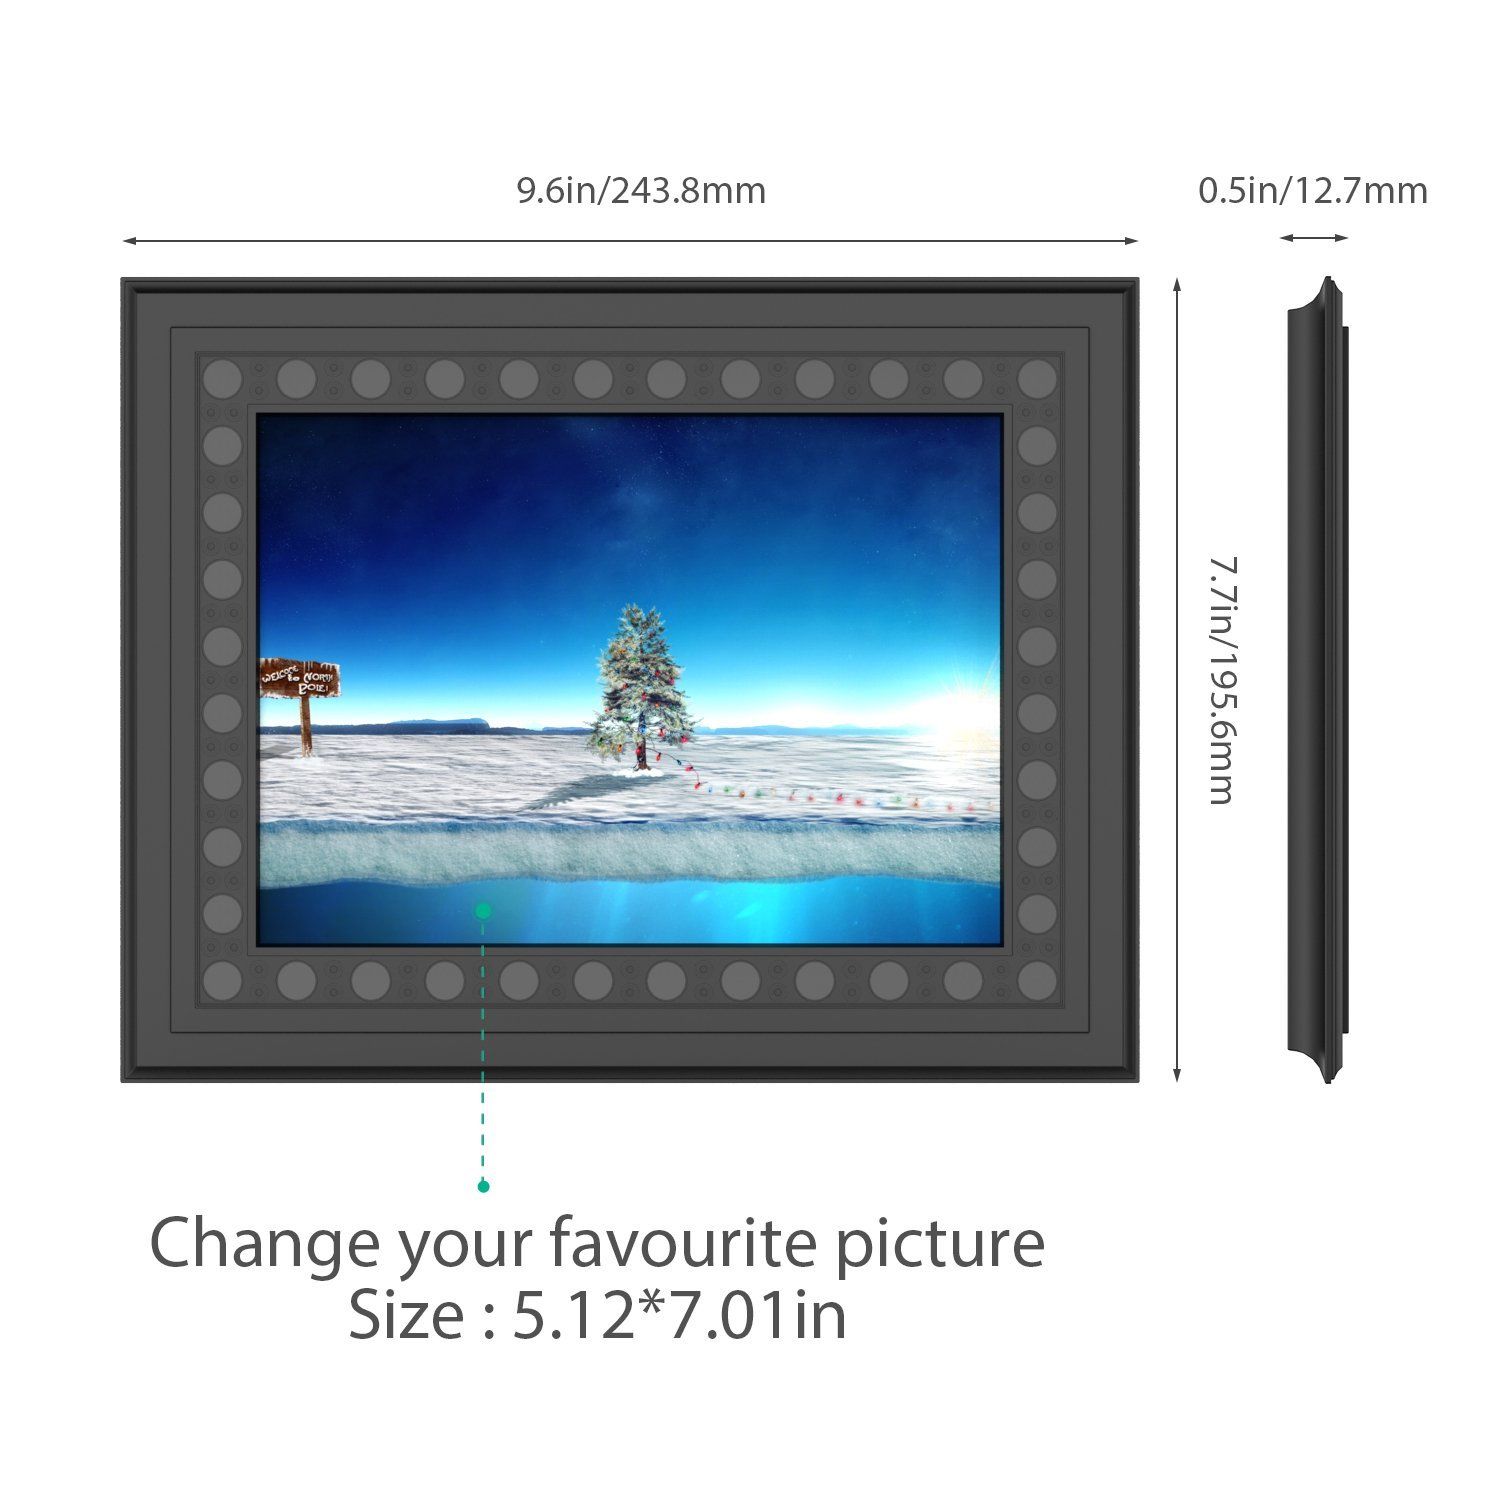 HD 720P Sary Frame Hidden Spy Camera - Dimension